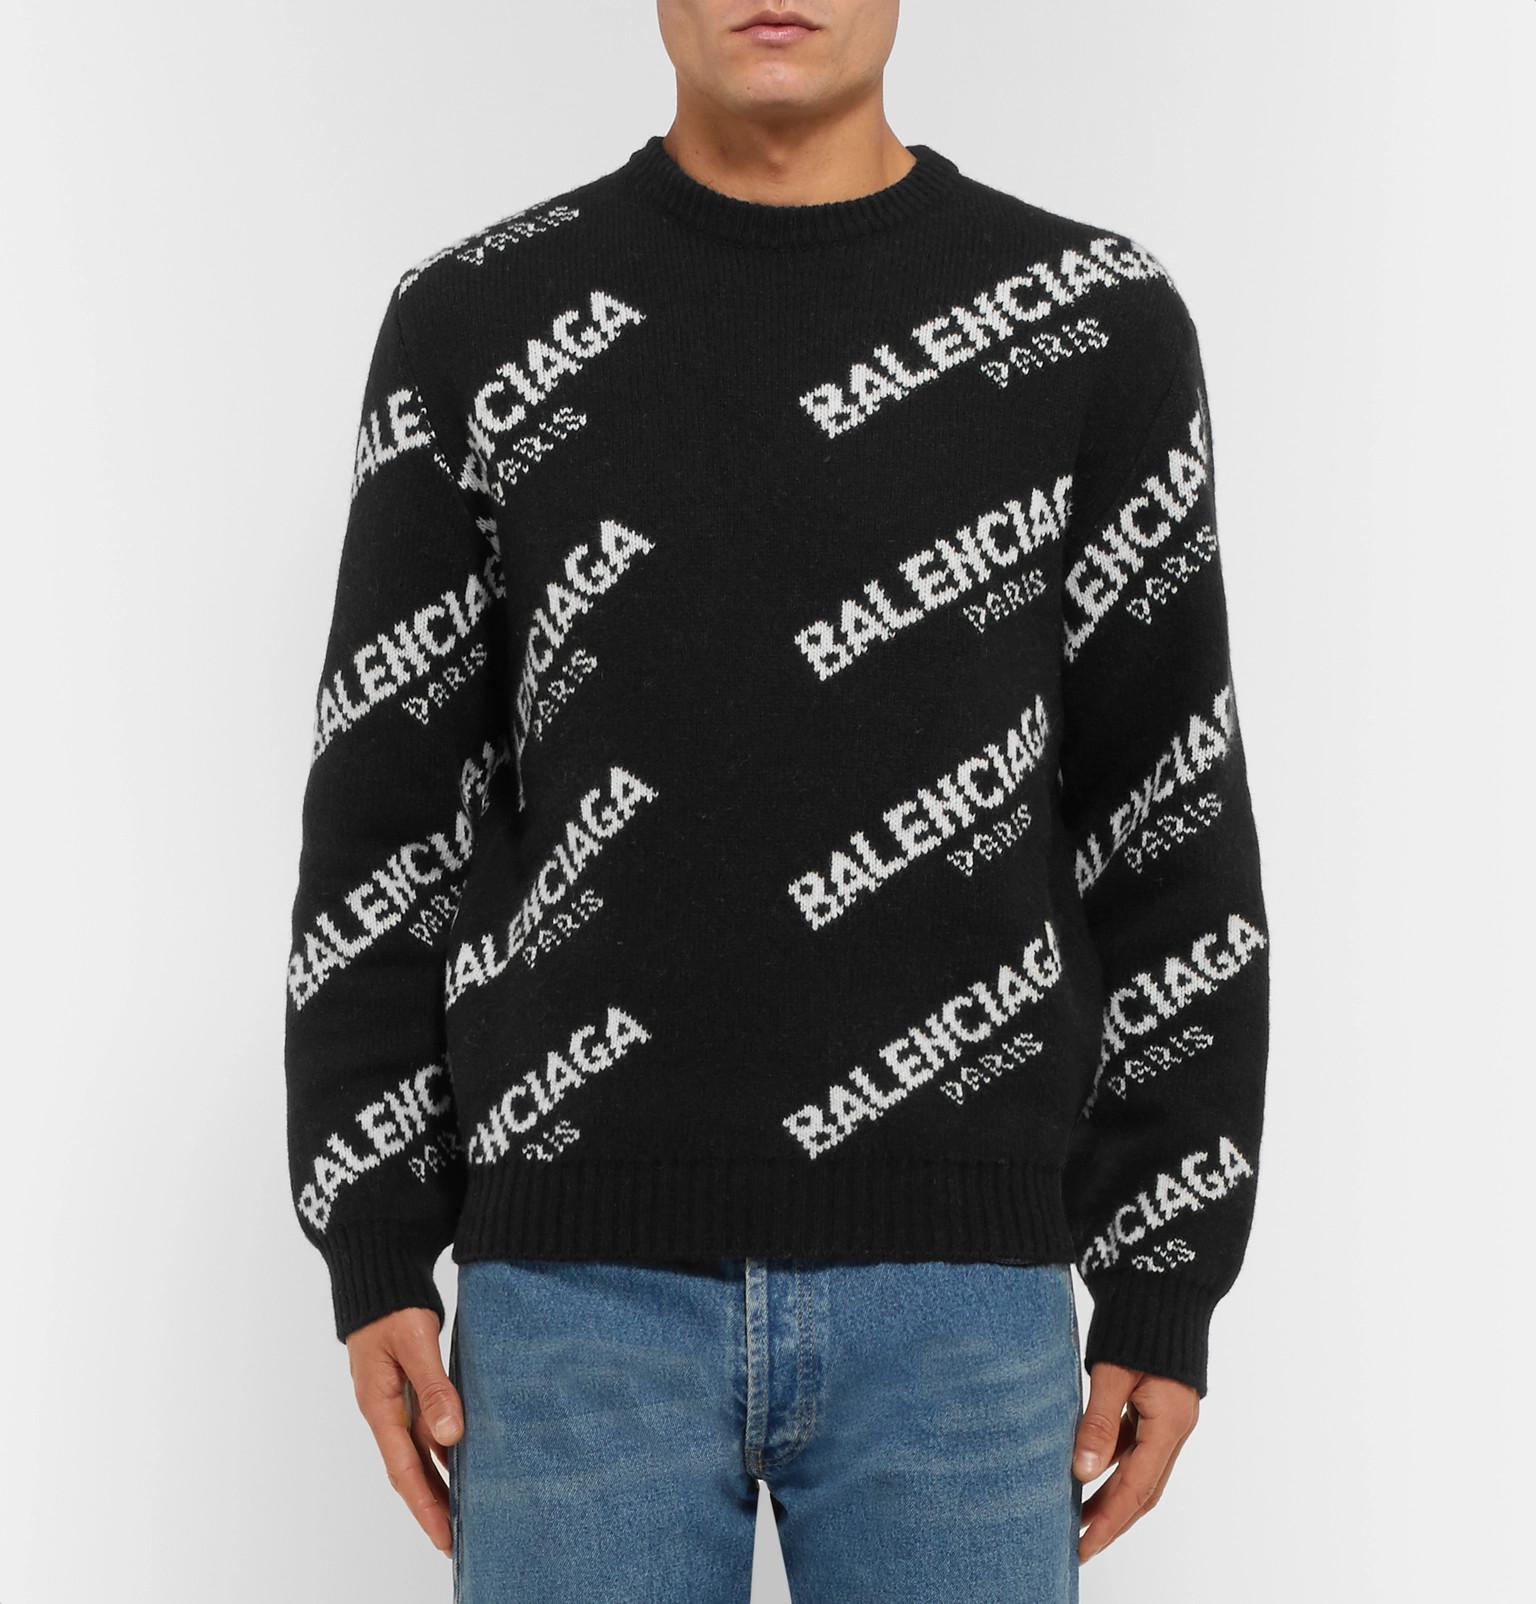 Balenciaga Logo-intarsia Knitted Sweater in Black for Men - Lyst